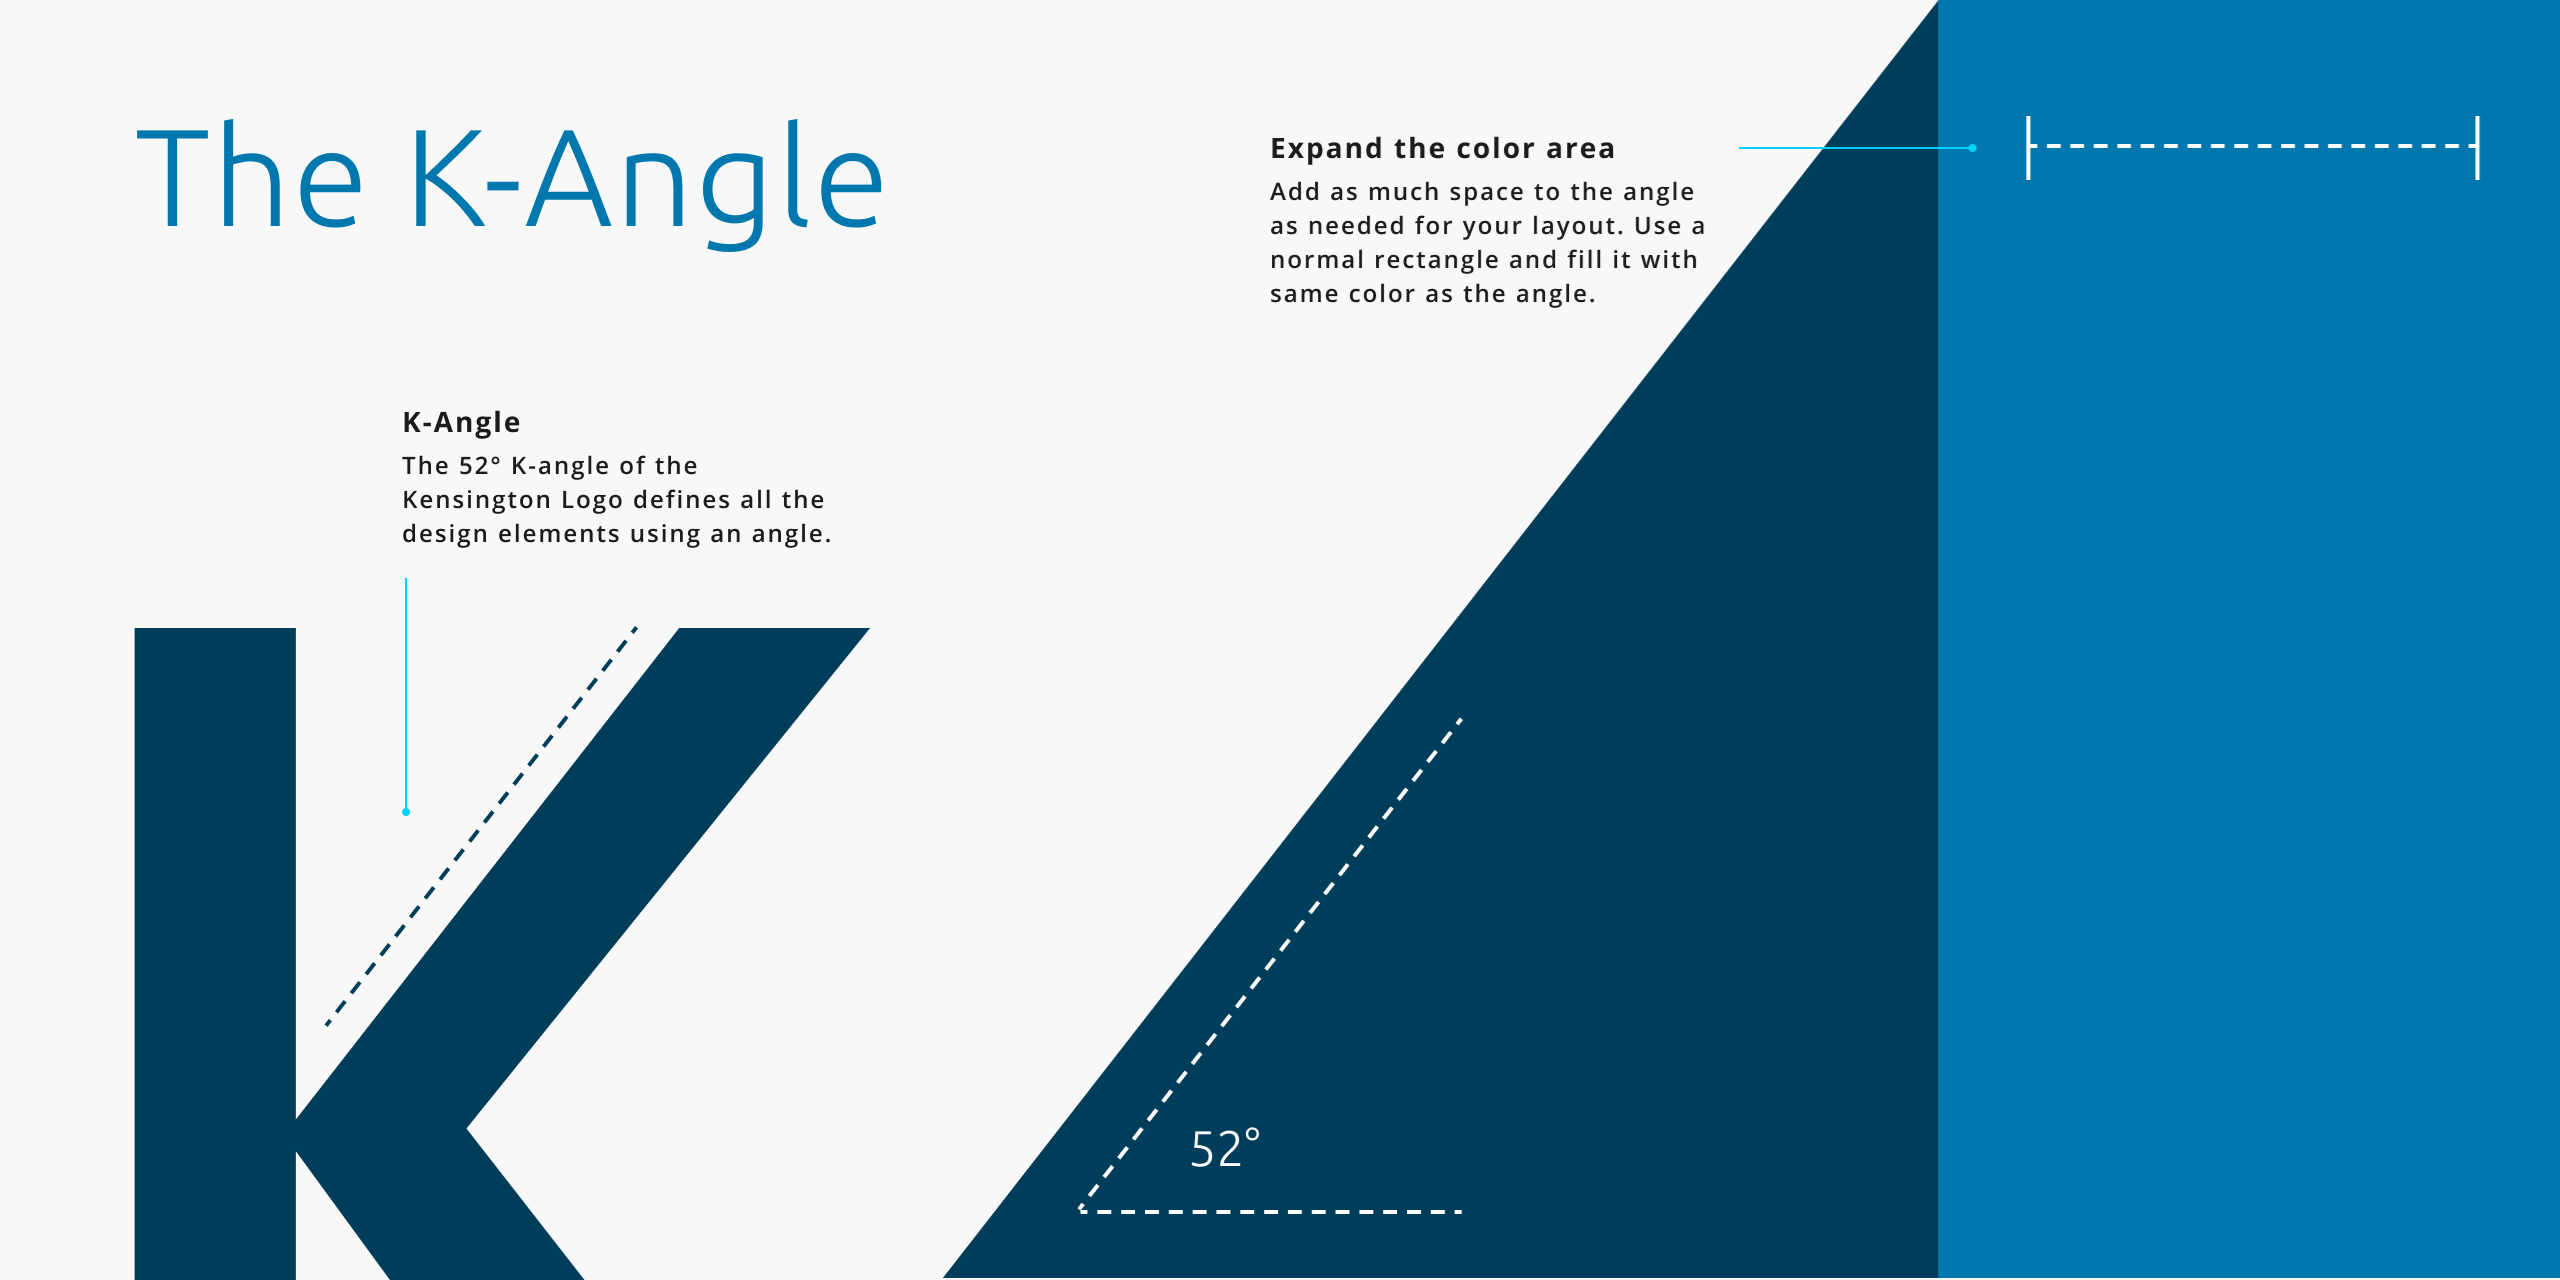 K-Angle explained